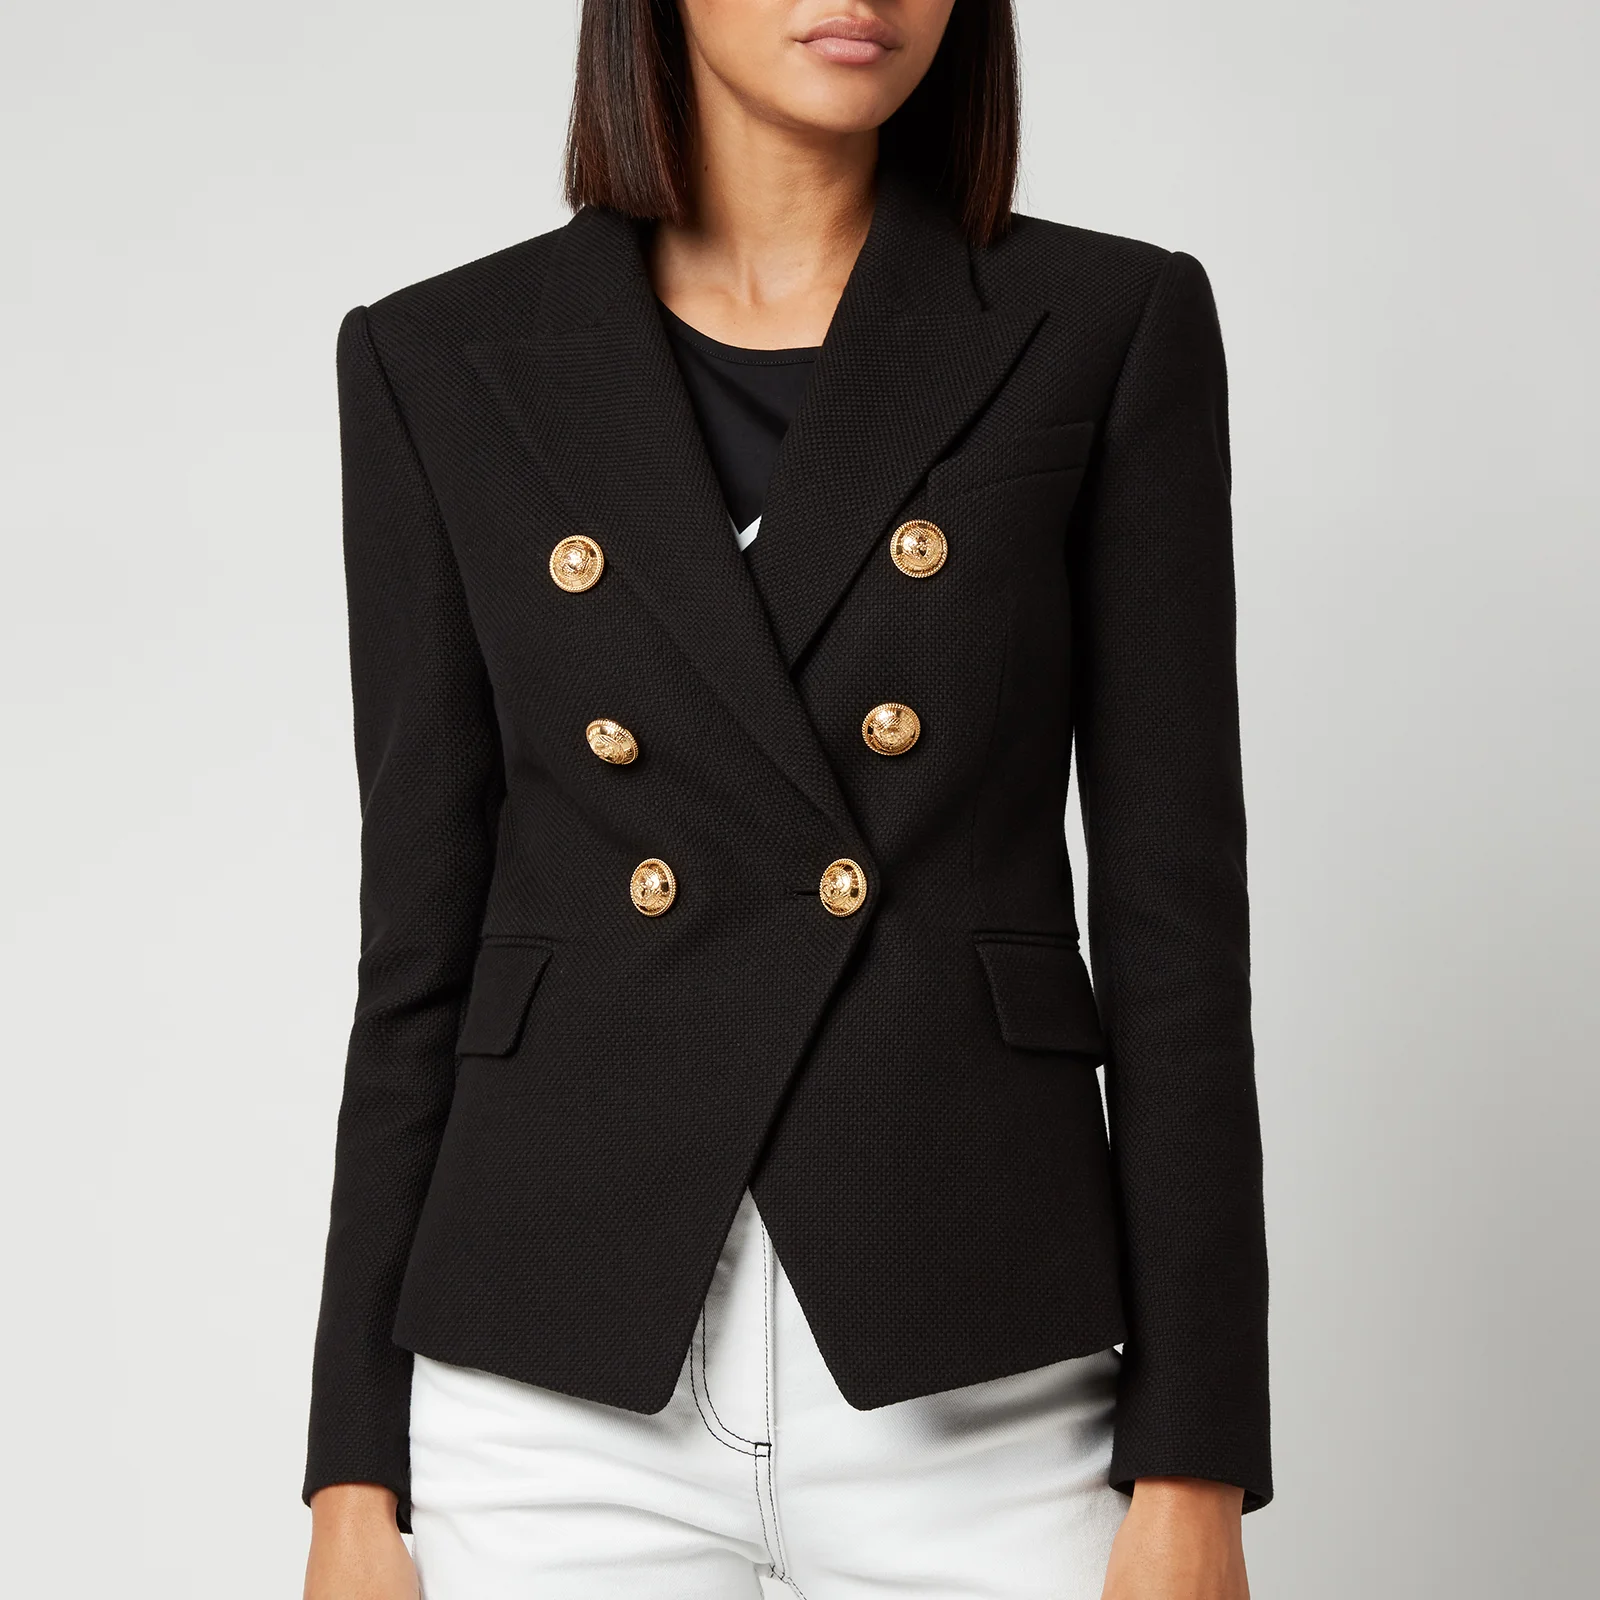 Balmain Women's 6 Button Cotton Pique Jacket - Black Image 1